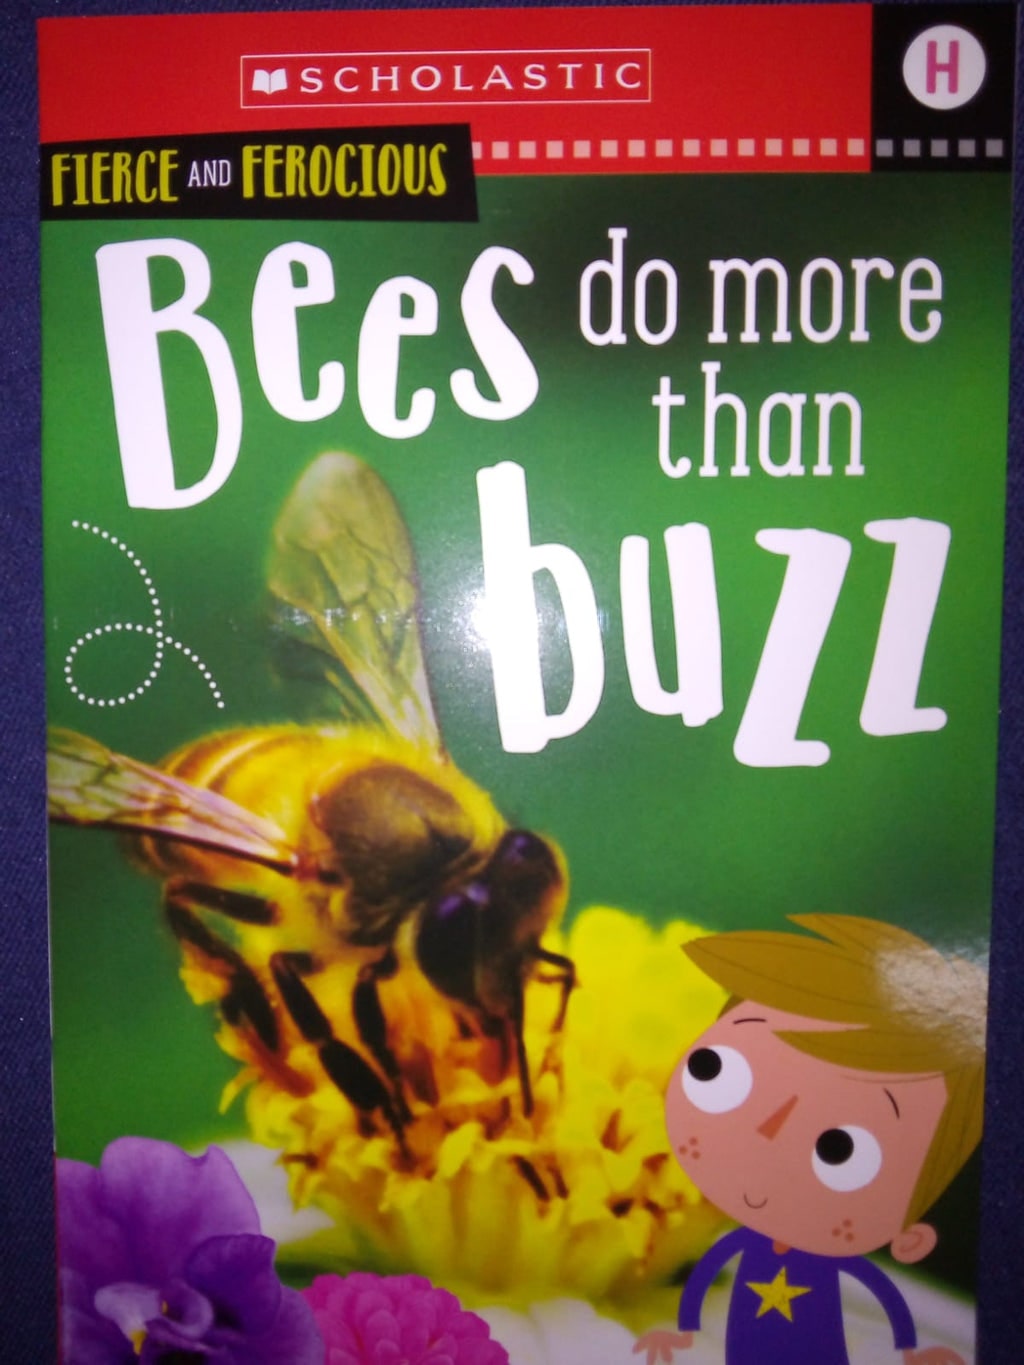 IMG : Animal Antics Fierce and Ferocious Bees do more than buzz